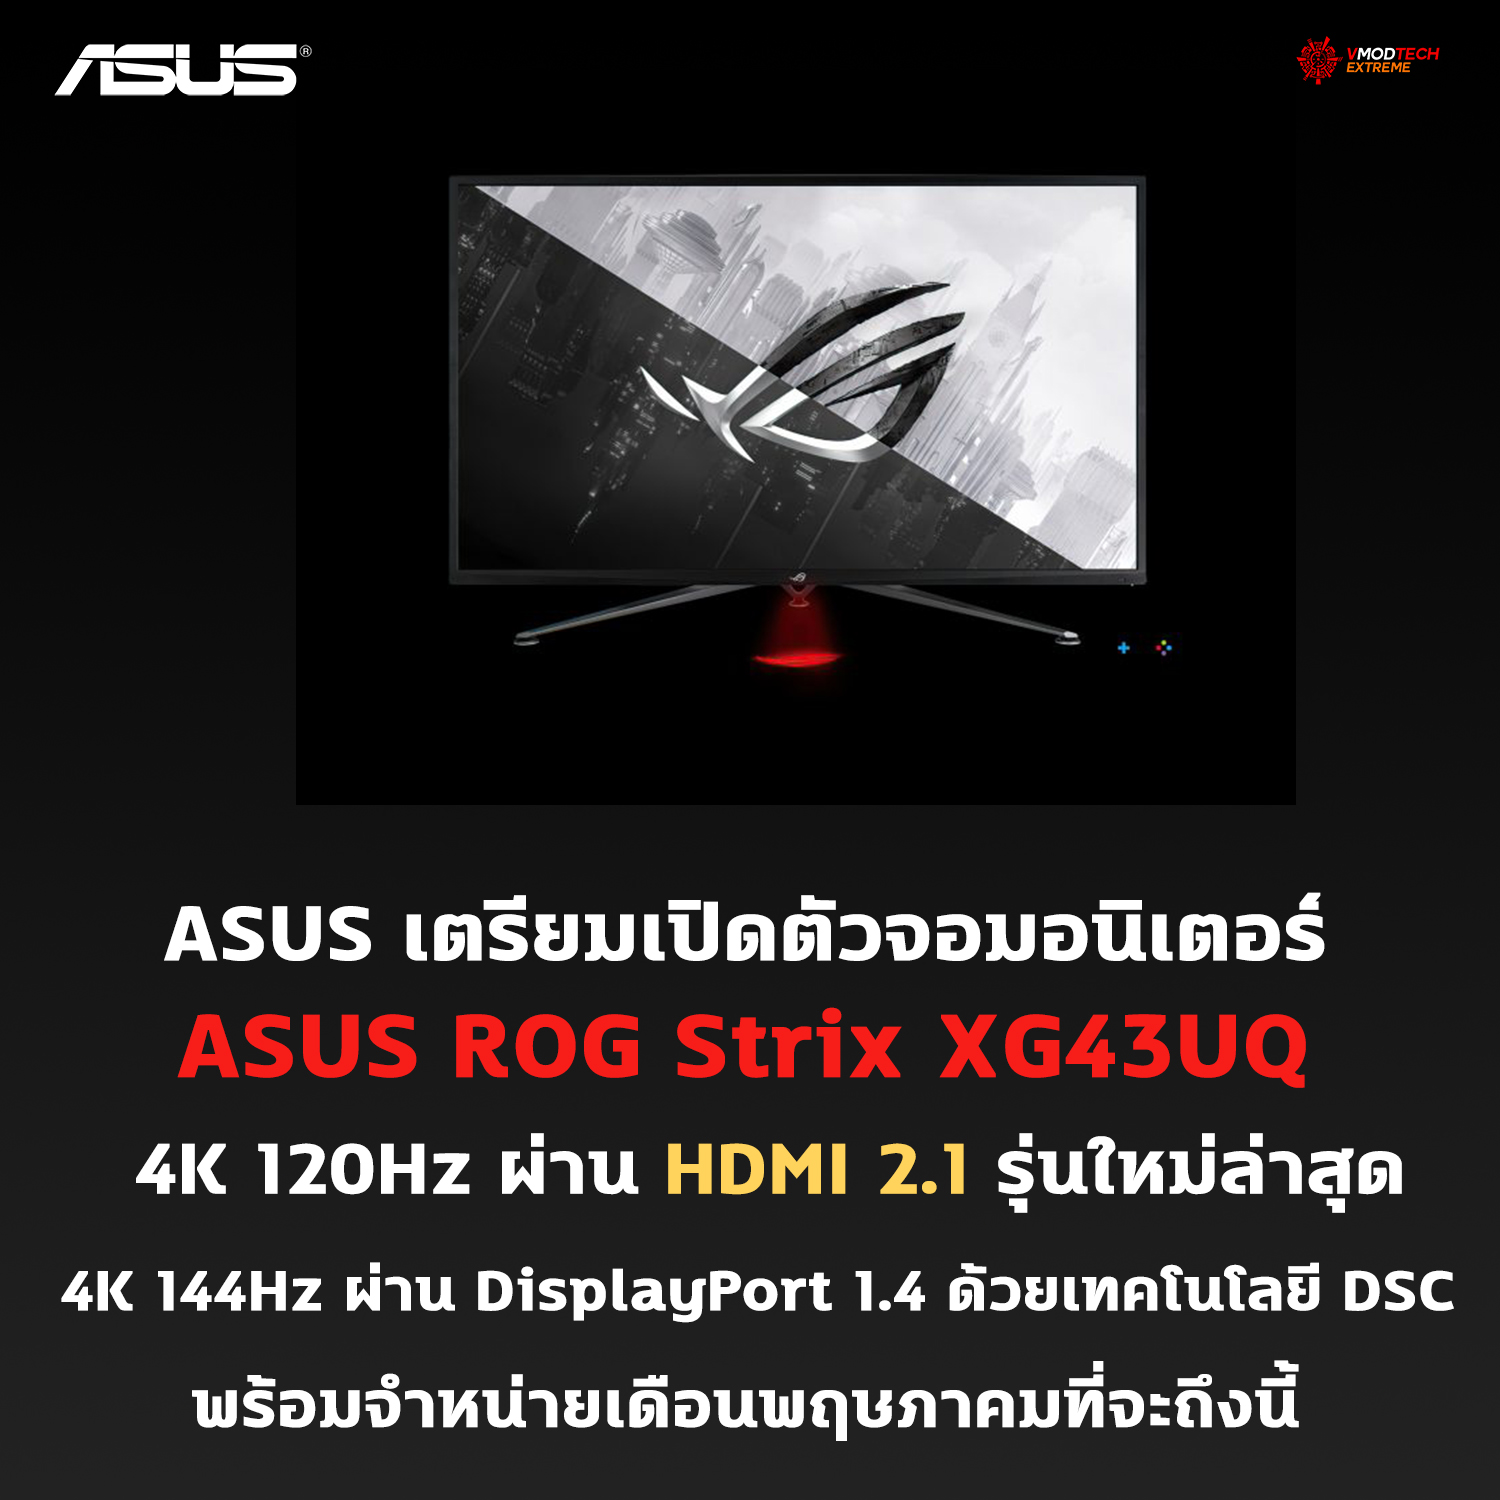 asus rog strix xg43uq hdmi21 ASUS เตรียมเปิดตัวจอมอนิเตอร์ ASUS ROG Strix XG43UQ รุ่นใหม่ล่าสุดที่มี HDMI 2.1 เป็นรุ่นแรกที่พร้อมใช้งาน ในเดือนพฤษภาคมที่จะถึงนี้ 